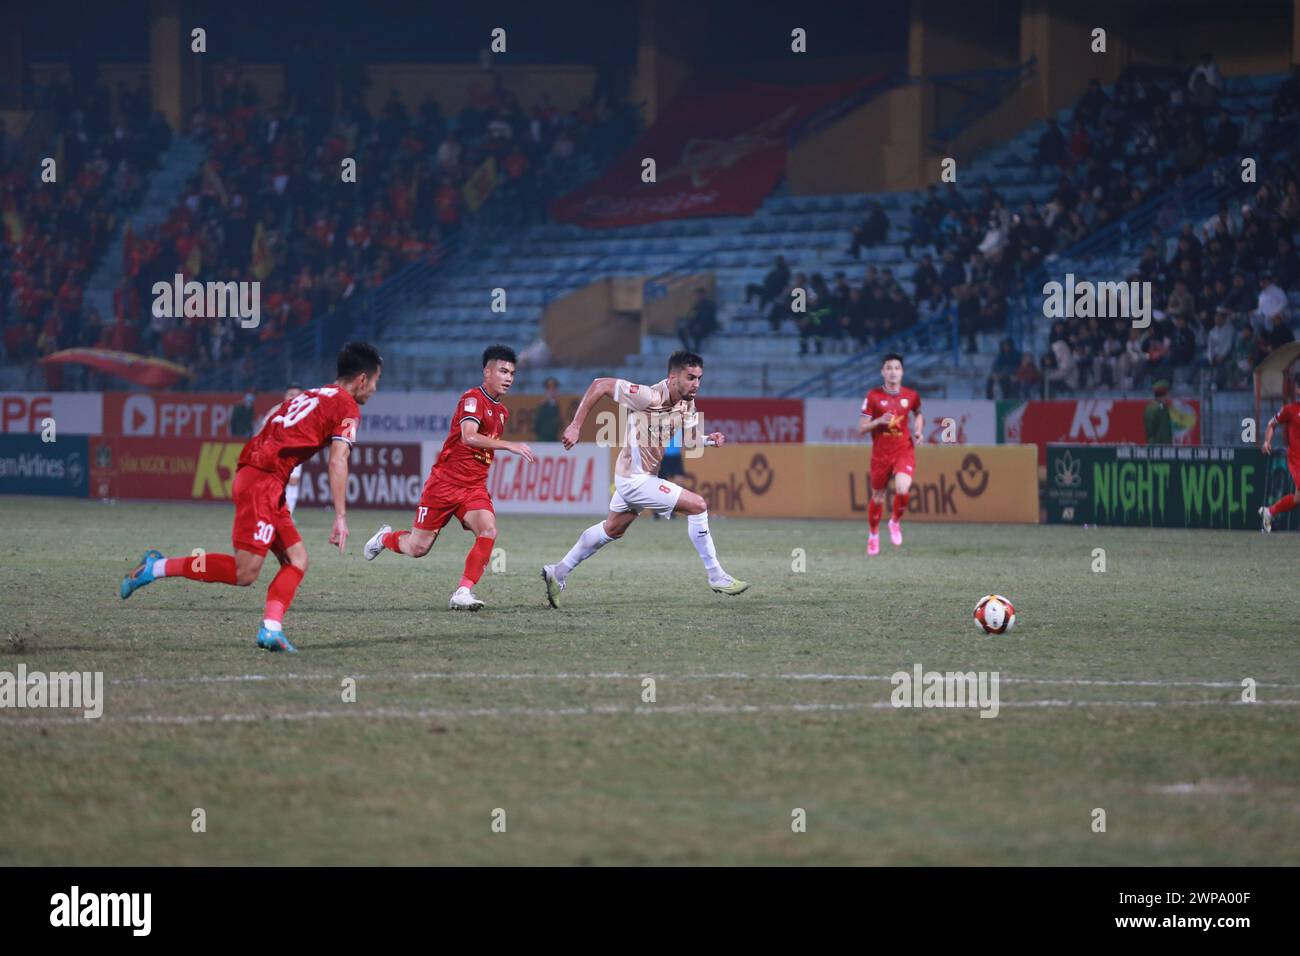 Vleague 1(Viet nam) 03/3/2024: Cong an Ha Noi FC vs Hong linh Ha Tinh FC. Hang Day stadium, Ha Noi, Vietnam. Stock Photo